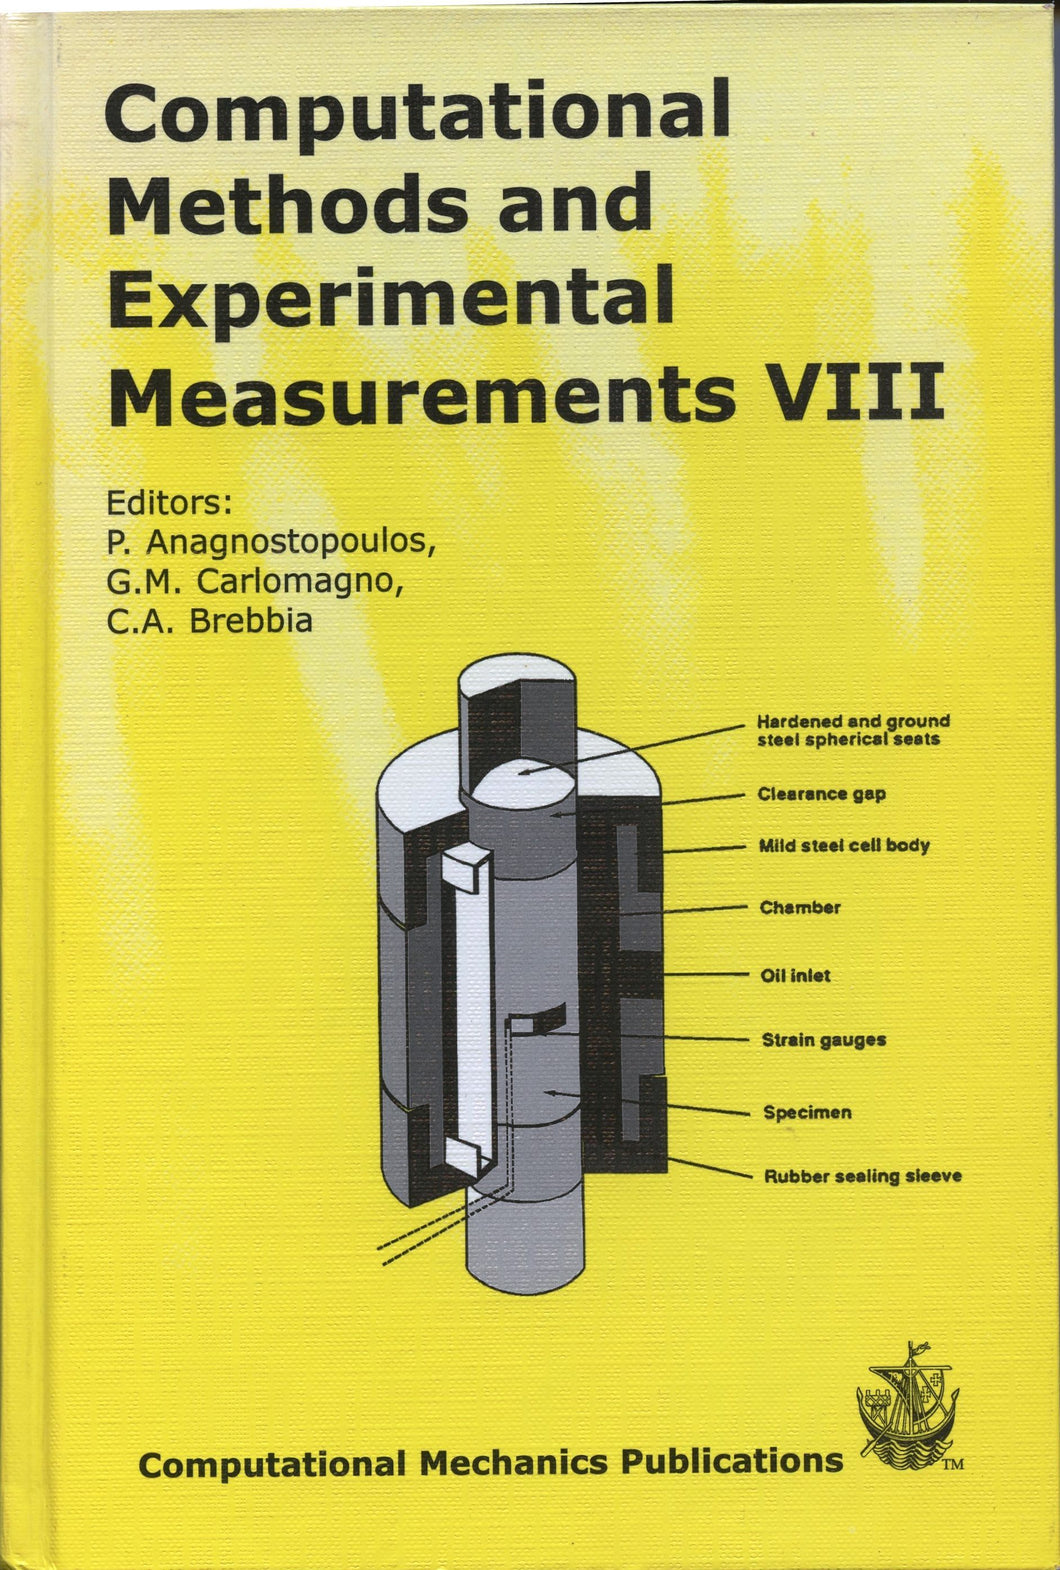 Computational Methods and Experimental Measurements VIII